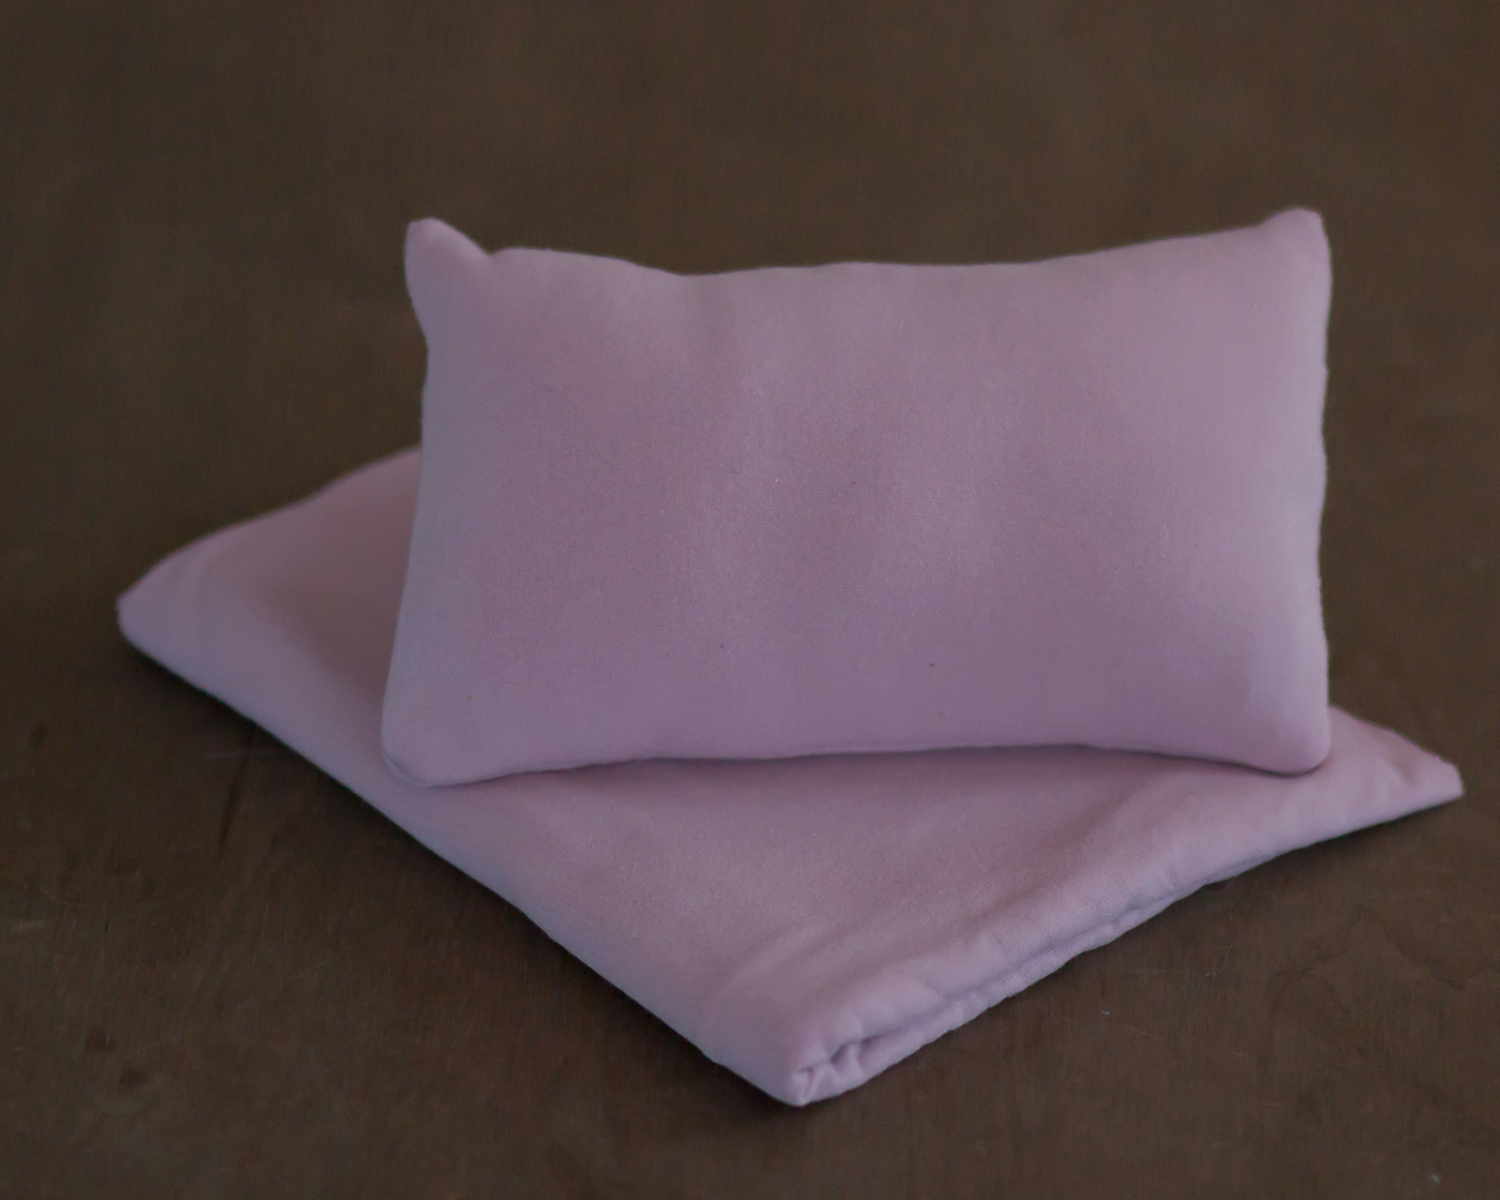 Antique pink posing pillow - newborn photo prop